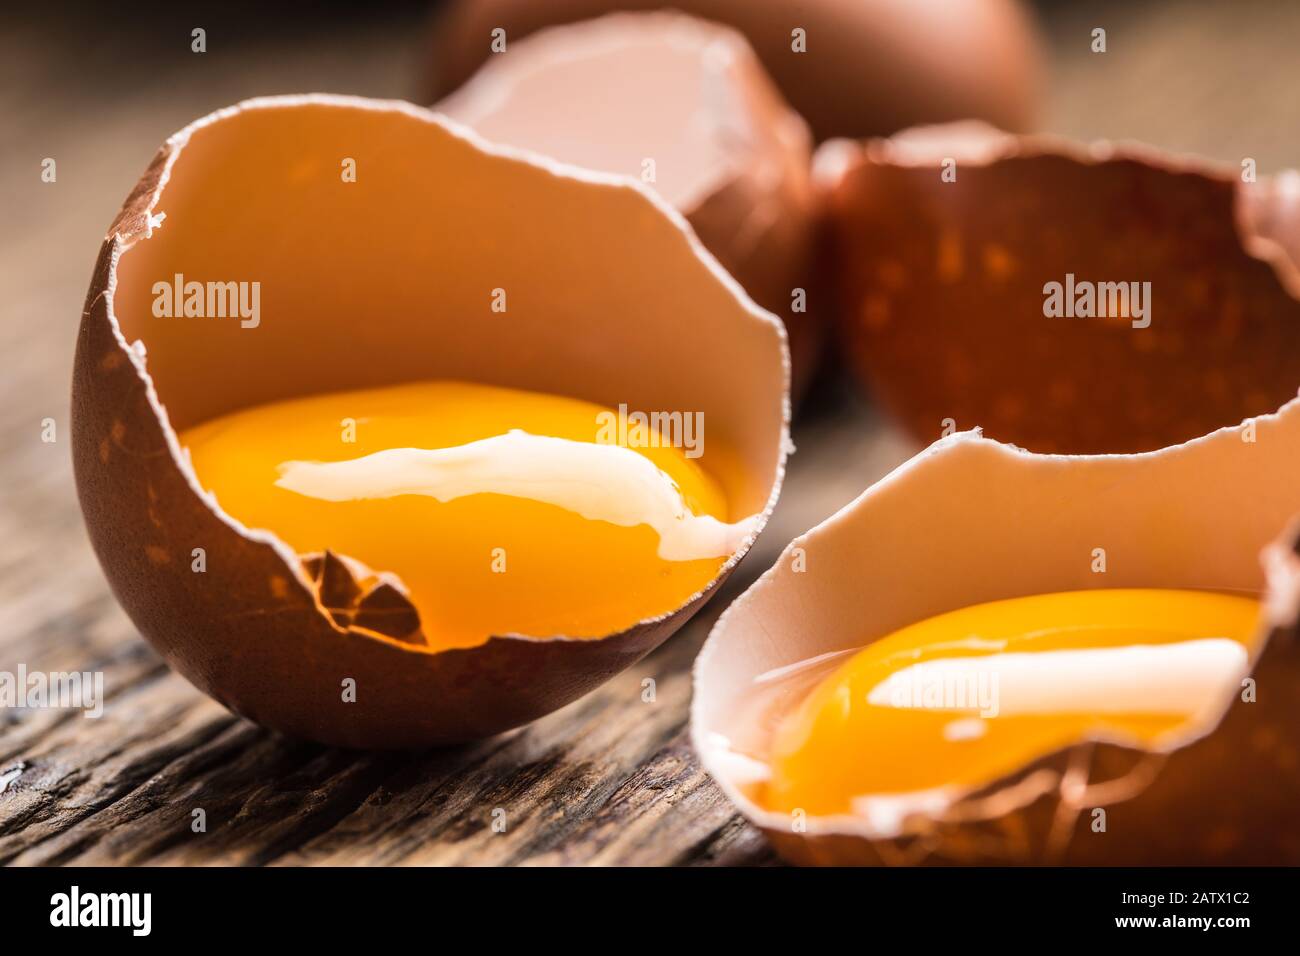 Broken chicken eggs with yolk on wooden table Stock Photo